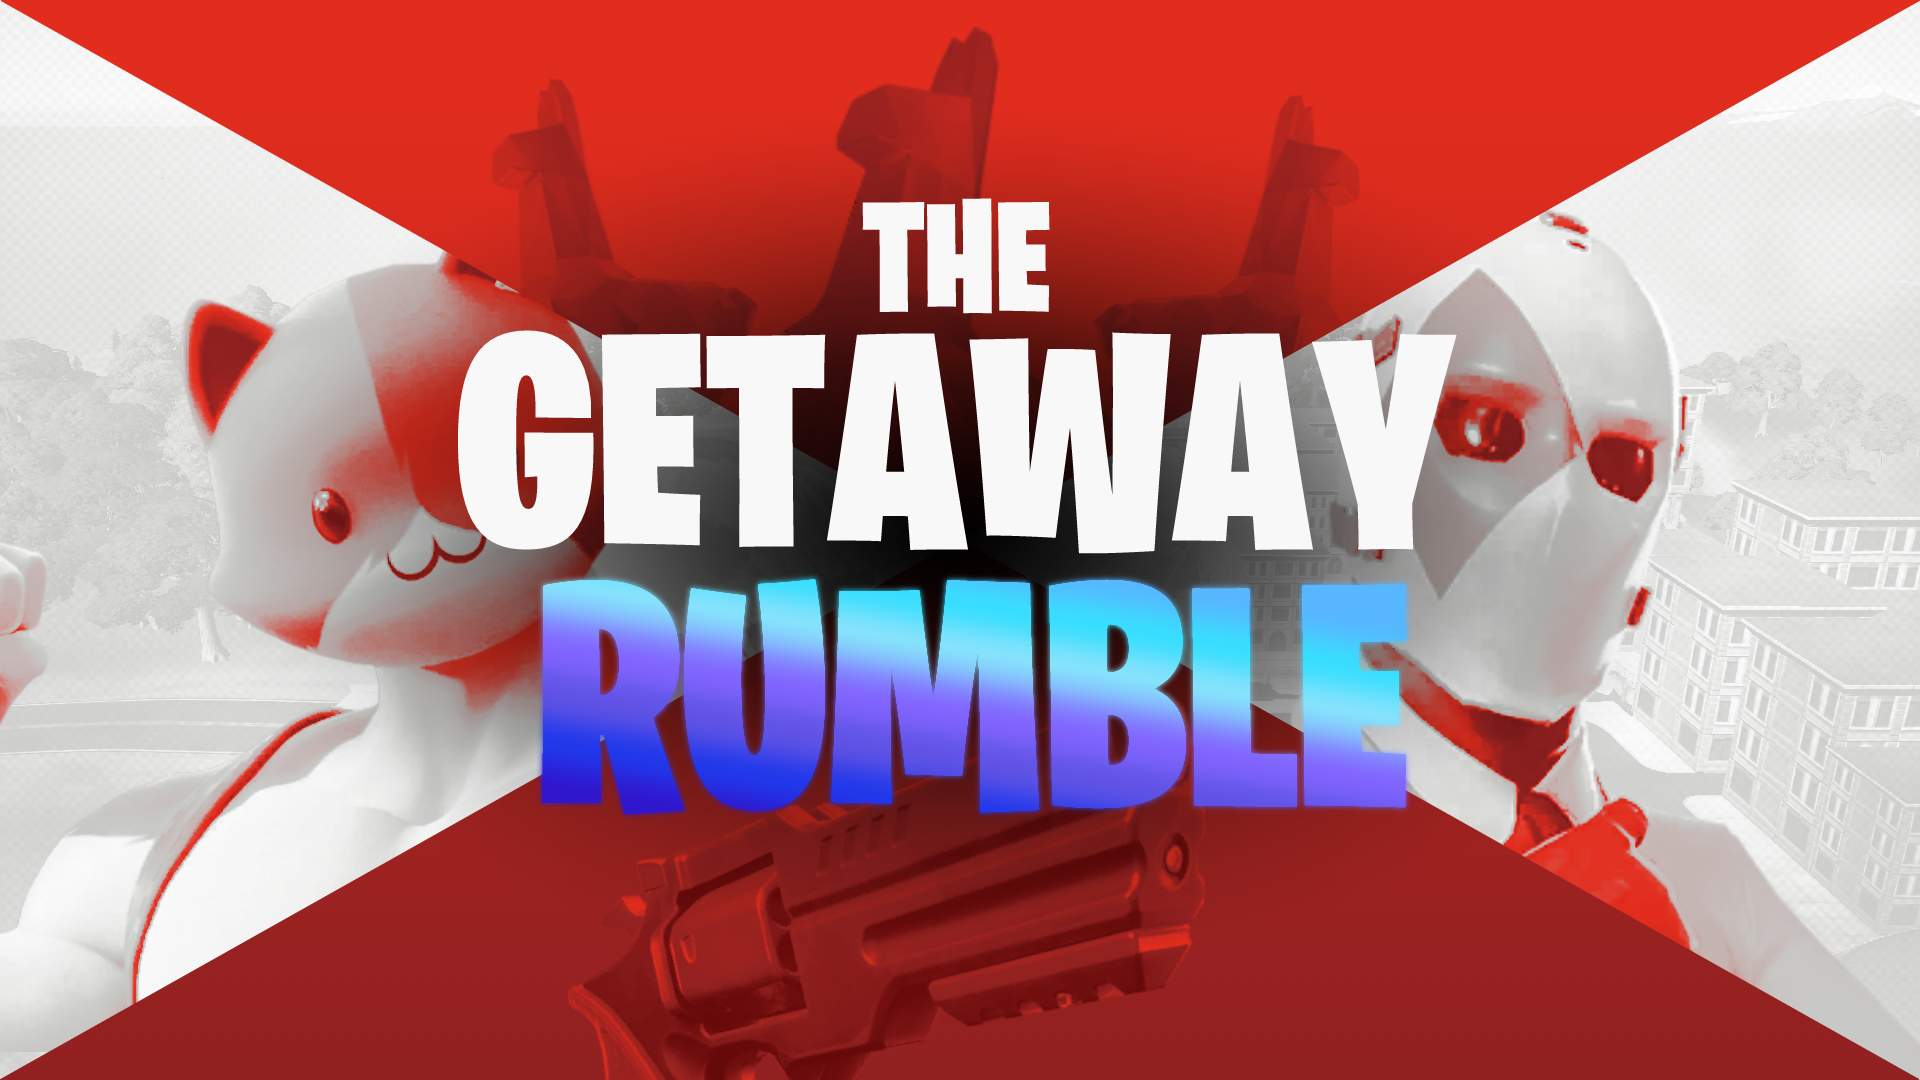 The Getaway Rumble